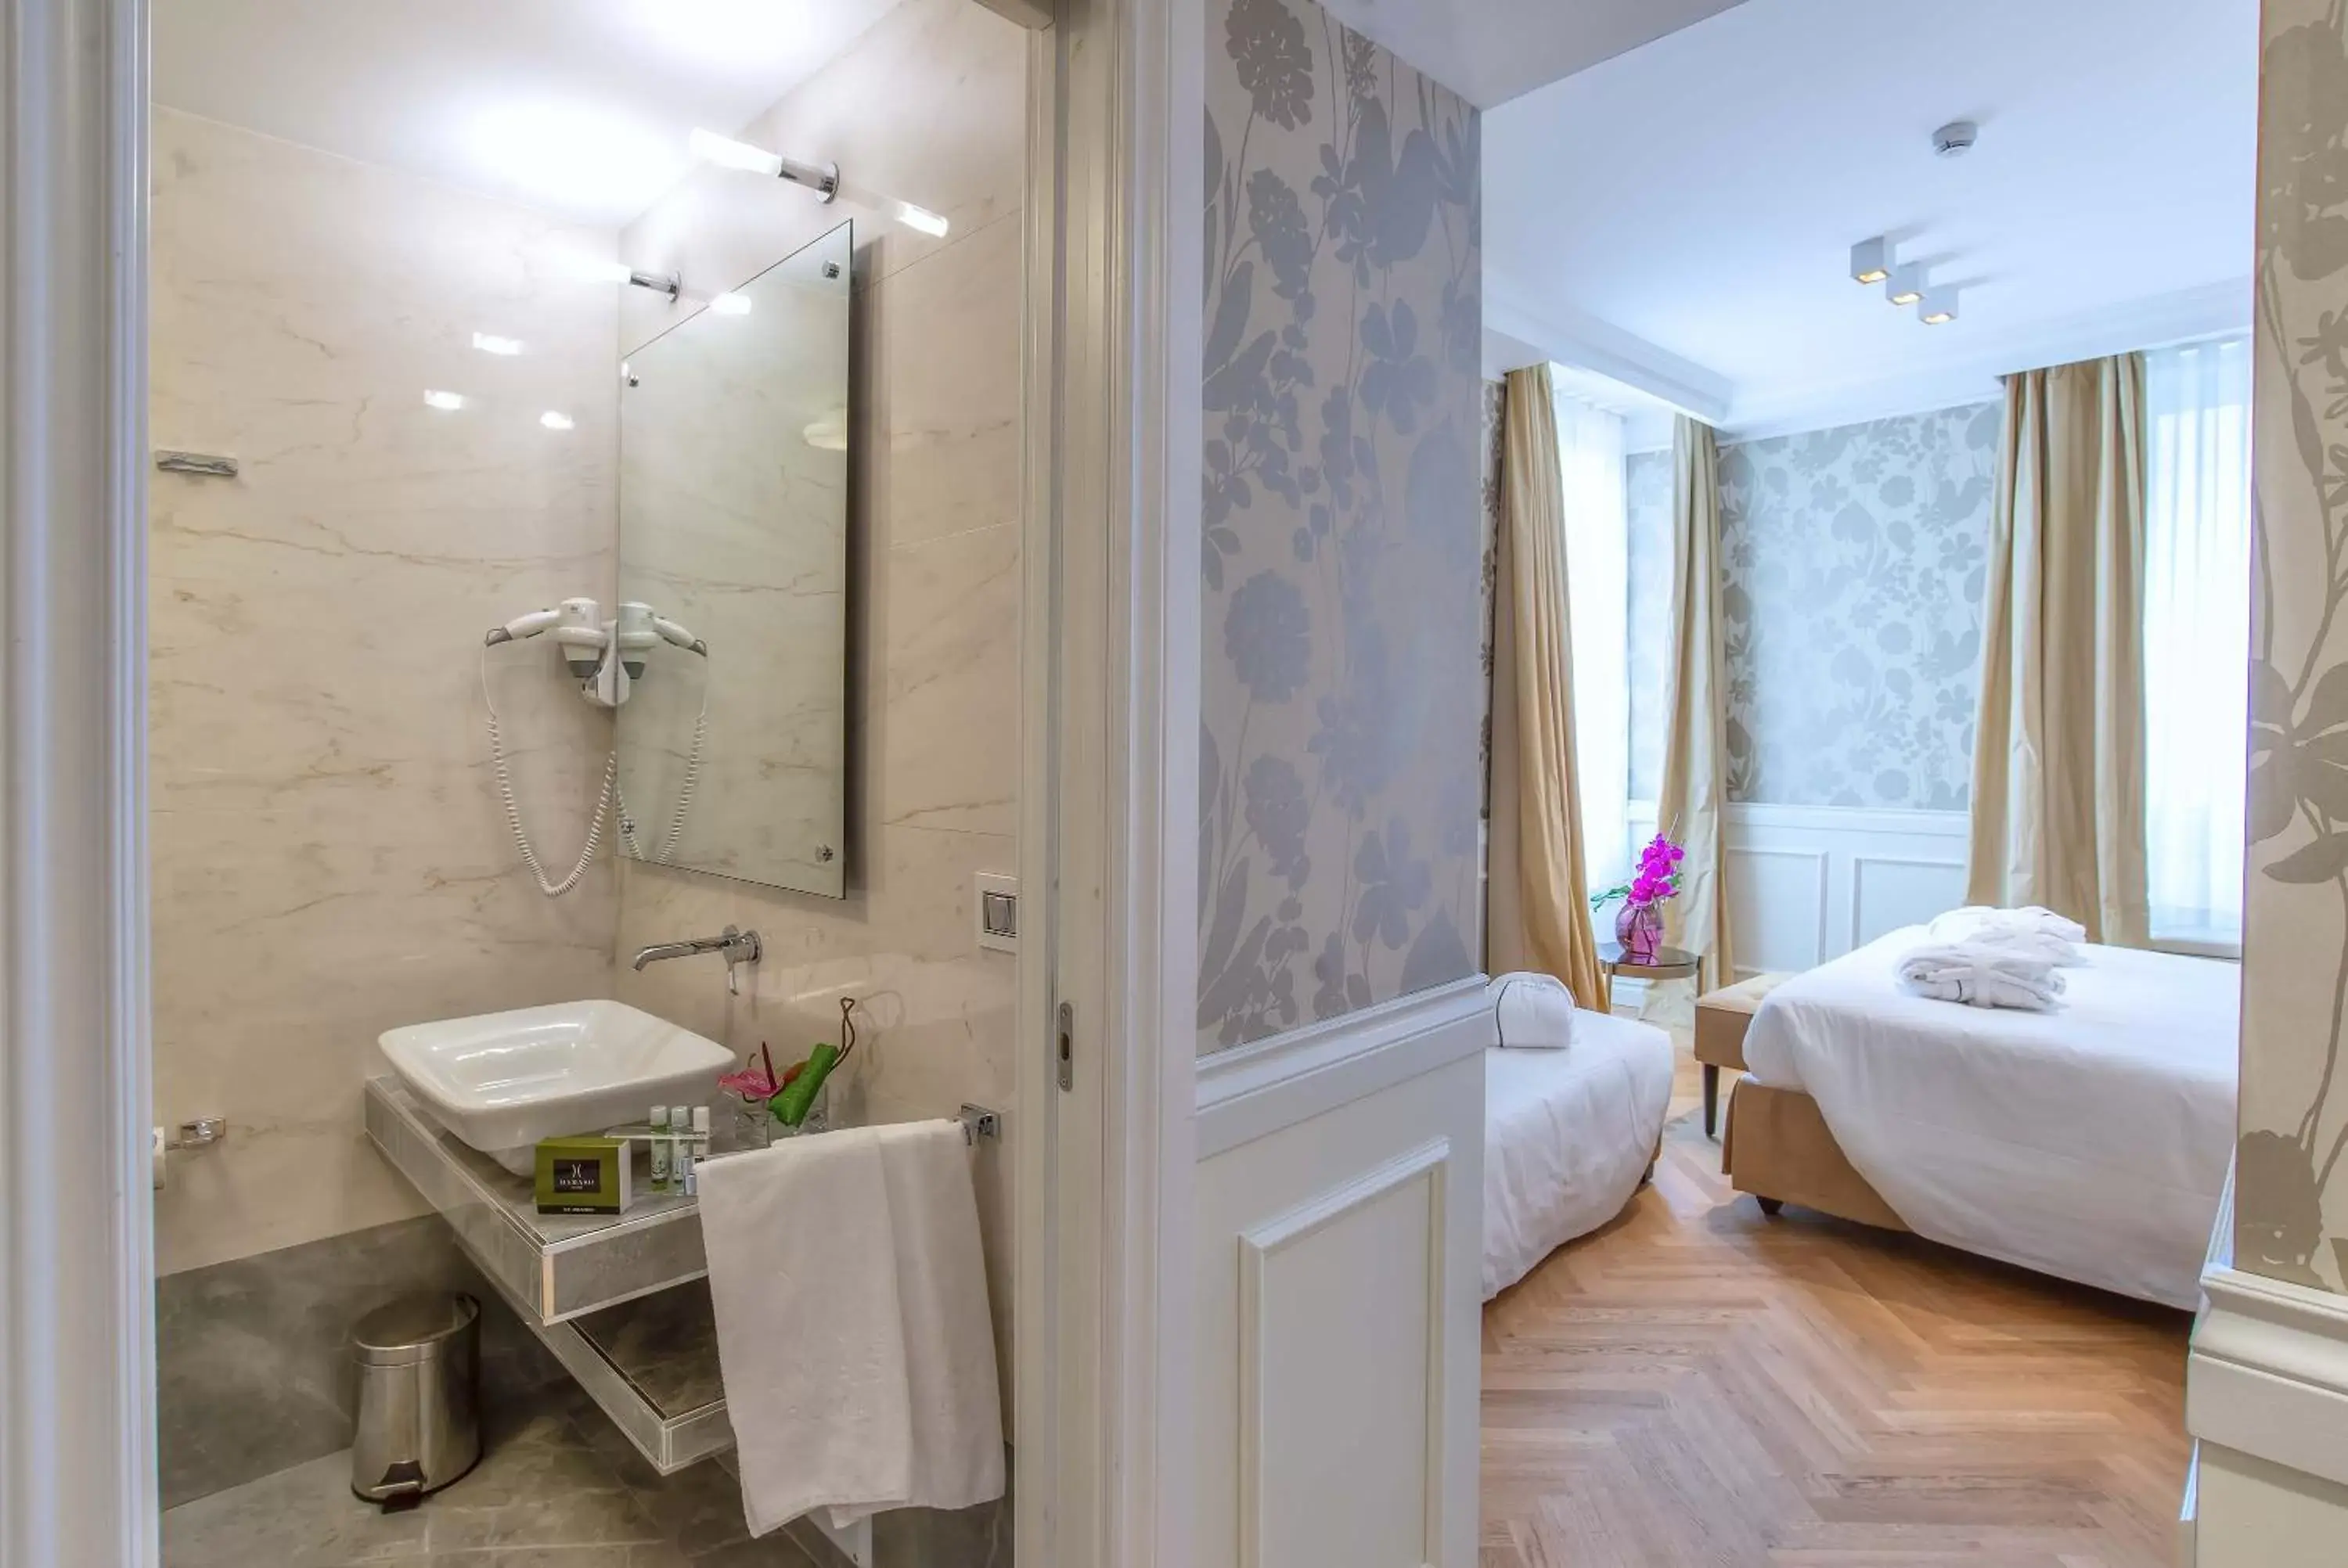 Photo of the whole room, Bathroom in Hotel Damaso